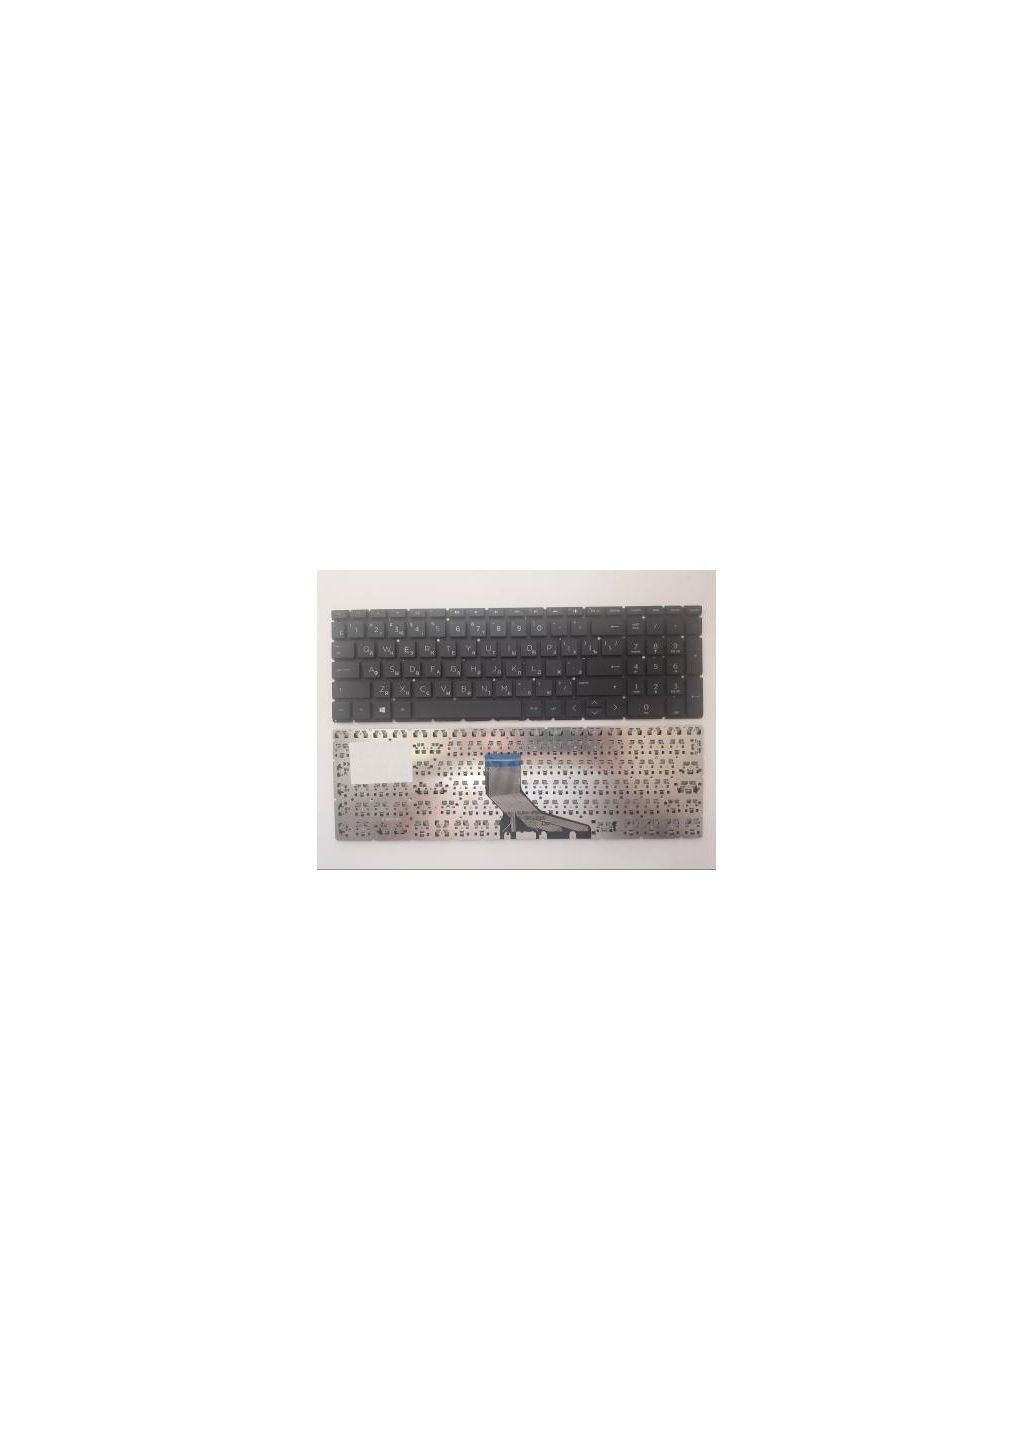 Клавиатура ноутбука Pavilion SleekBook 15DA 250 G7, 255 G7 Series черная (A46139) HP pavilion sleekbook 15-da 250 g7, 255 g7 series чер (276706711)